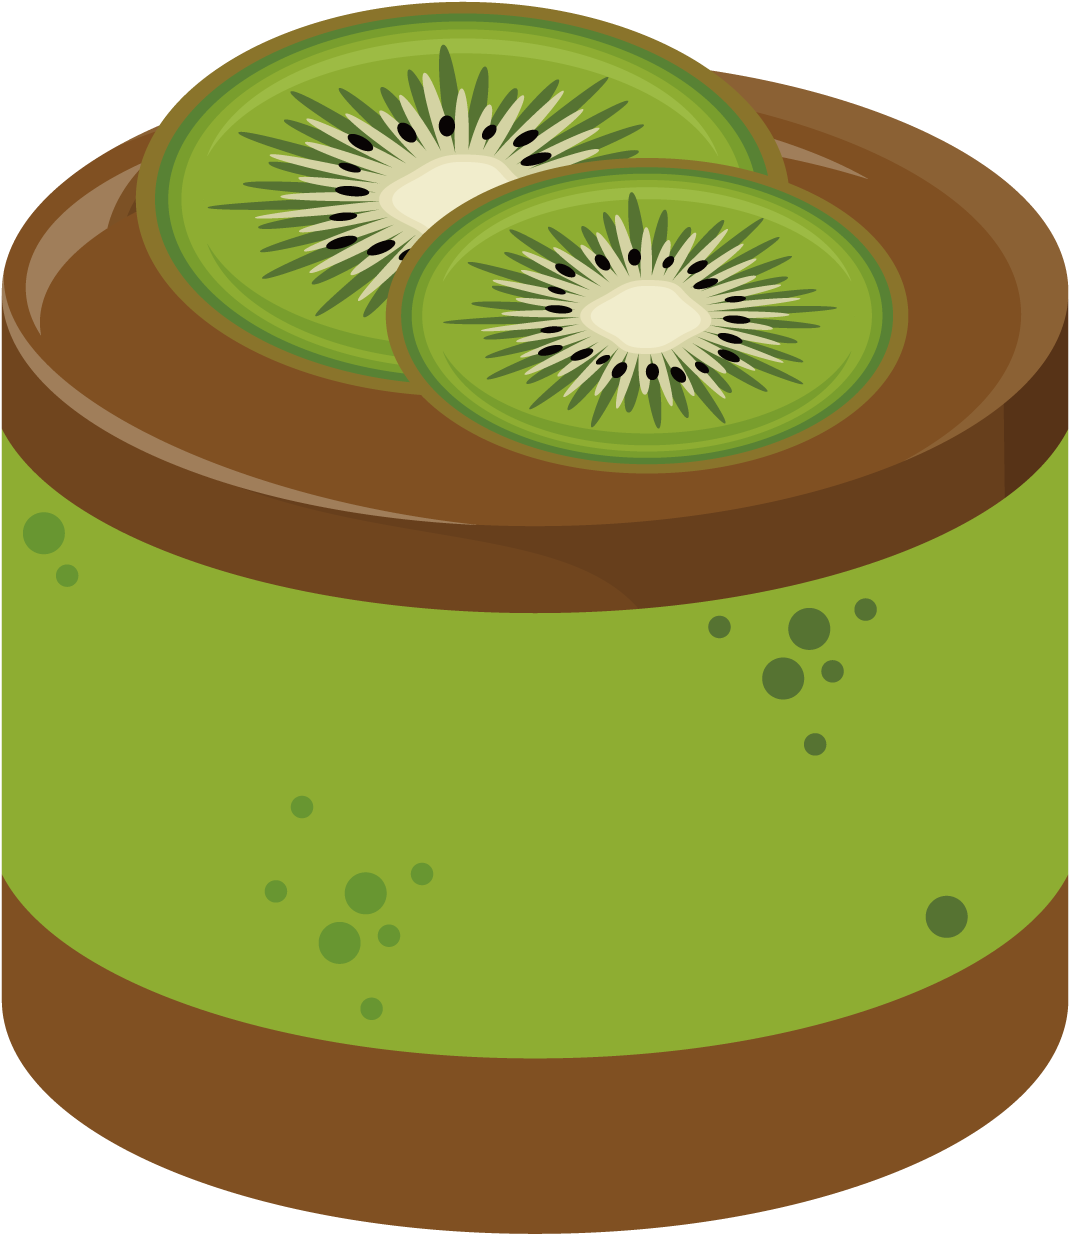 Kiwifruit Fruit Salad Actinidia Deliciosa - Kiwifruit Fruit Salad Actinidia Deliciosa (1276x1276)